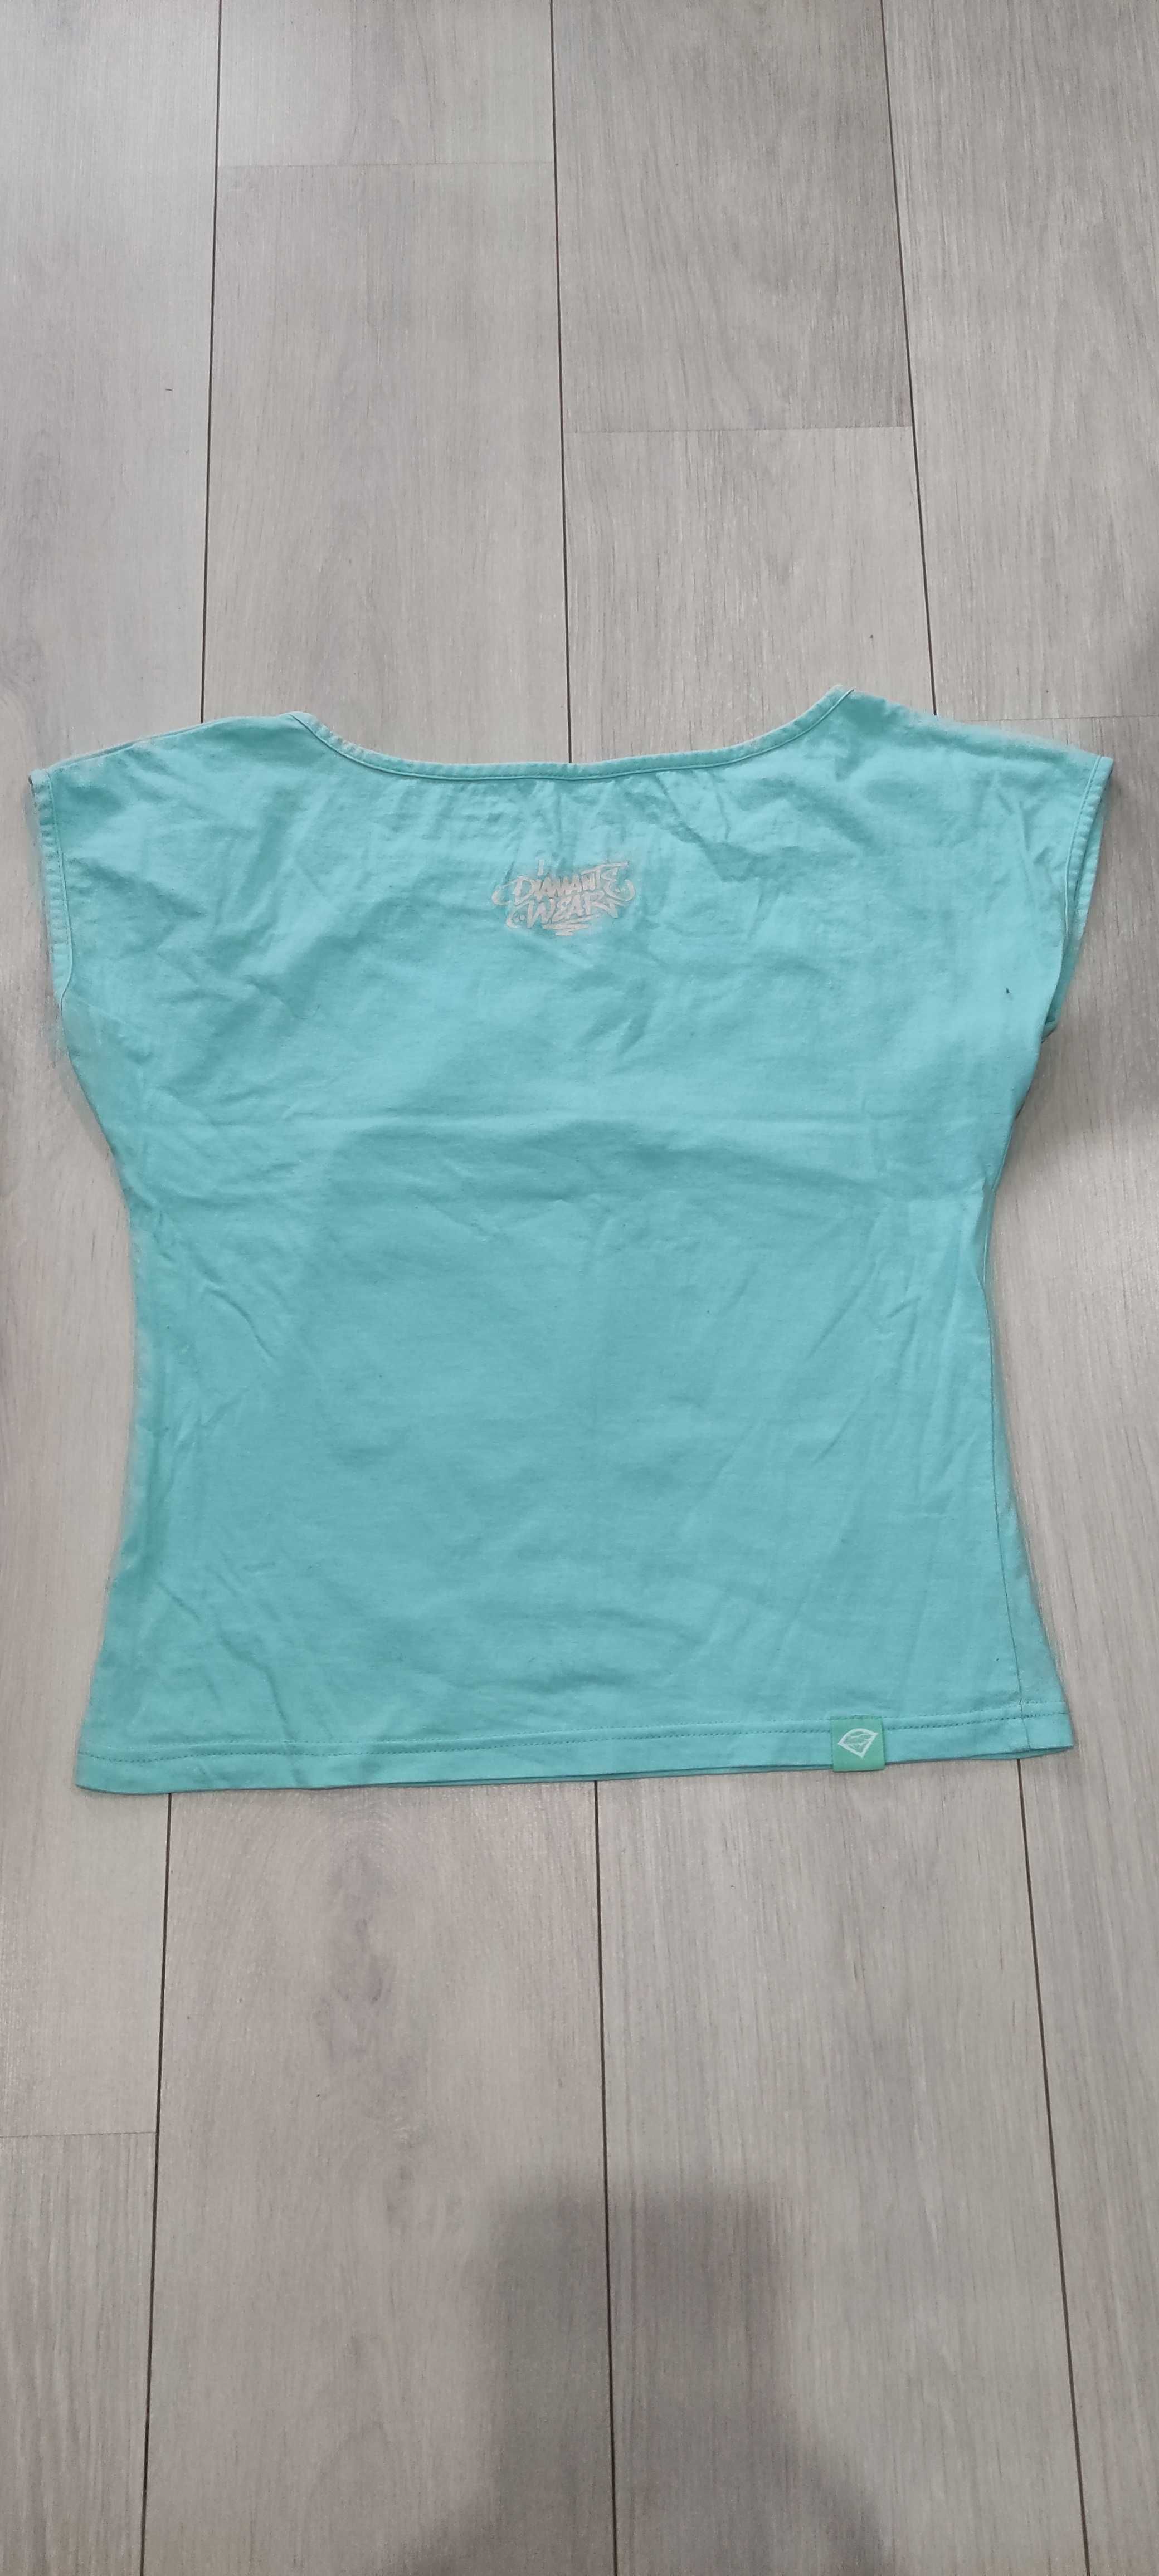 Miętowa koszulka/bluzka, rozmiar XS